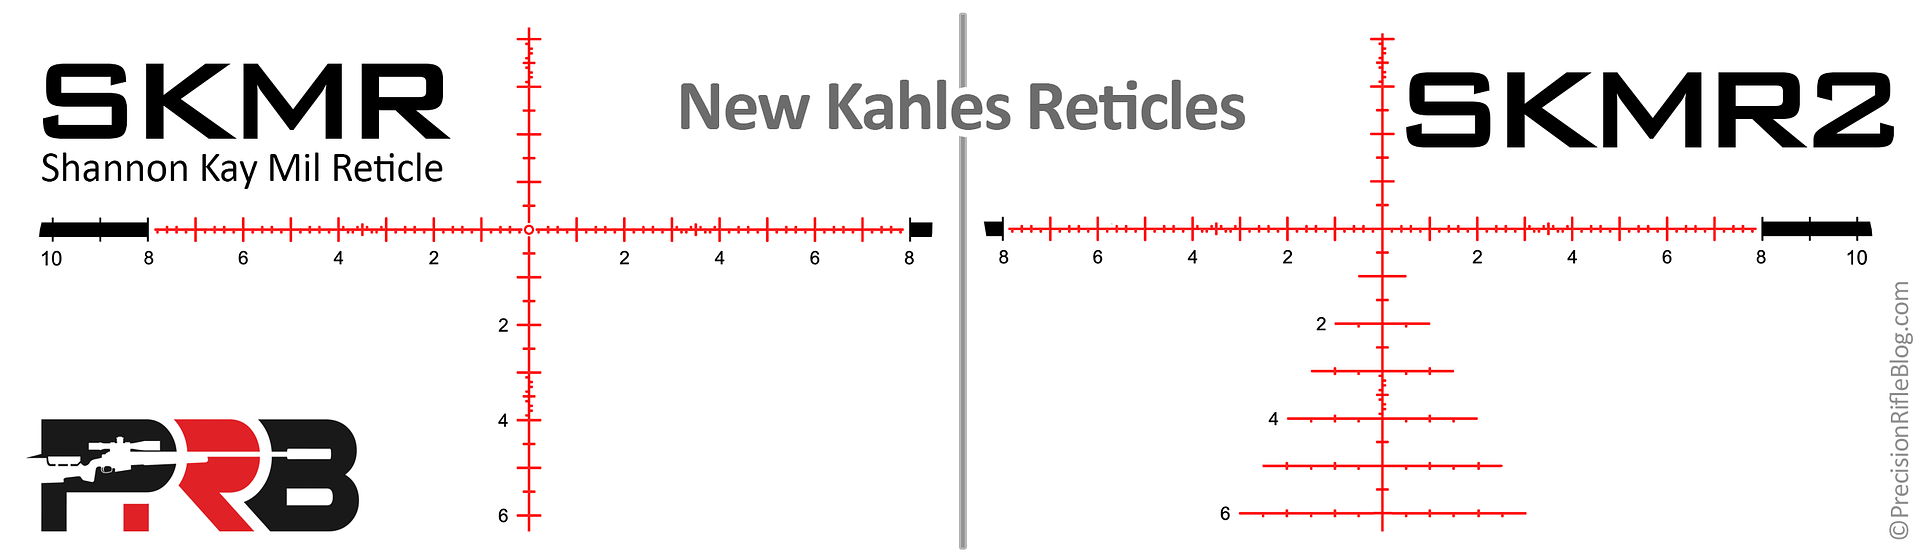 SKMR-and-SKMR2-Reticles-Kahles_zpsceshle